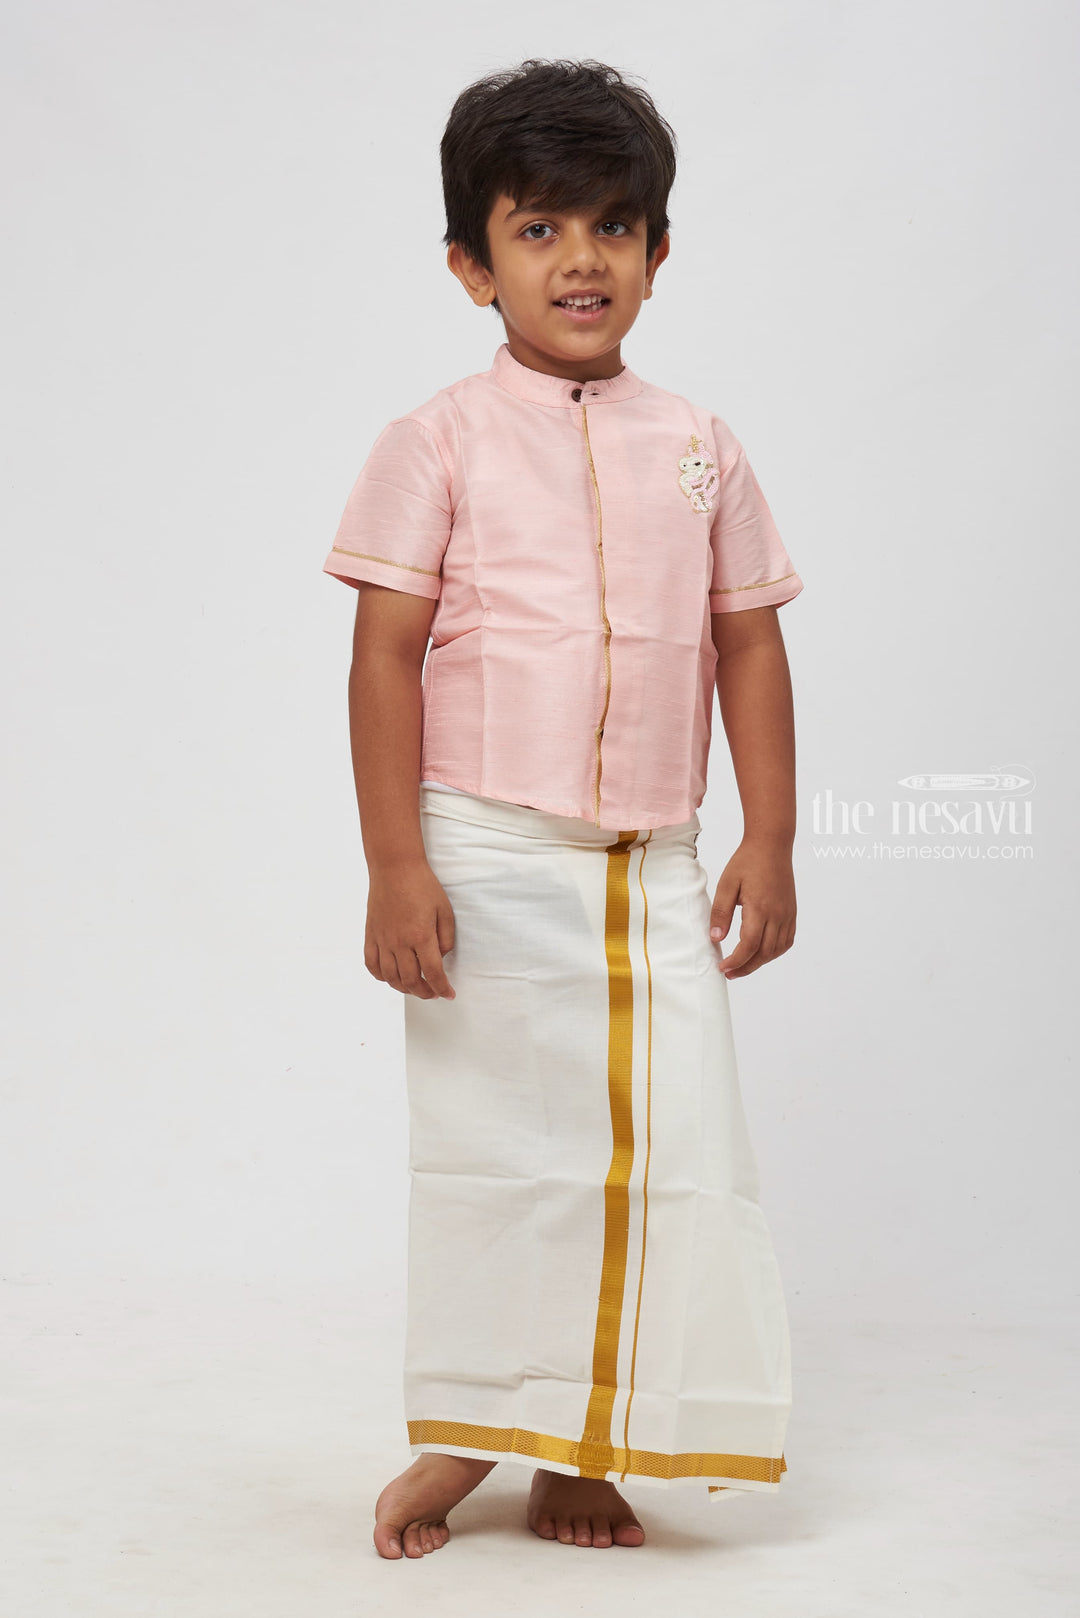 The Nesavu Boys Silk Shirt Boys Pink Silk Shirt with Ornate Embellishment Nesavu 16 (1Y) / Pink / Blend Silk BS113A-16 Nesavu Boys Pink Silk Shirt | Ornate Embellishment | Traditional Celebration Wear | The Nesavu